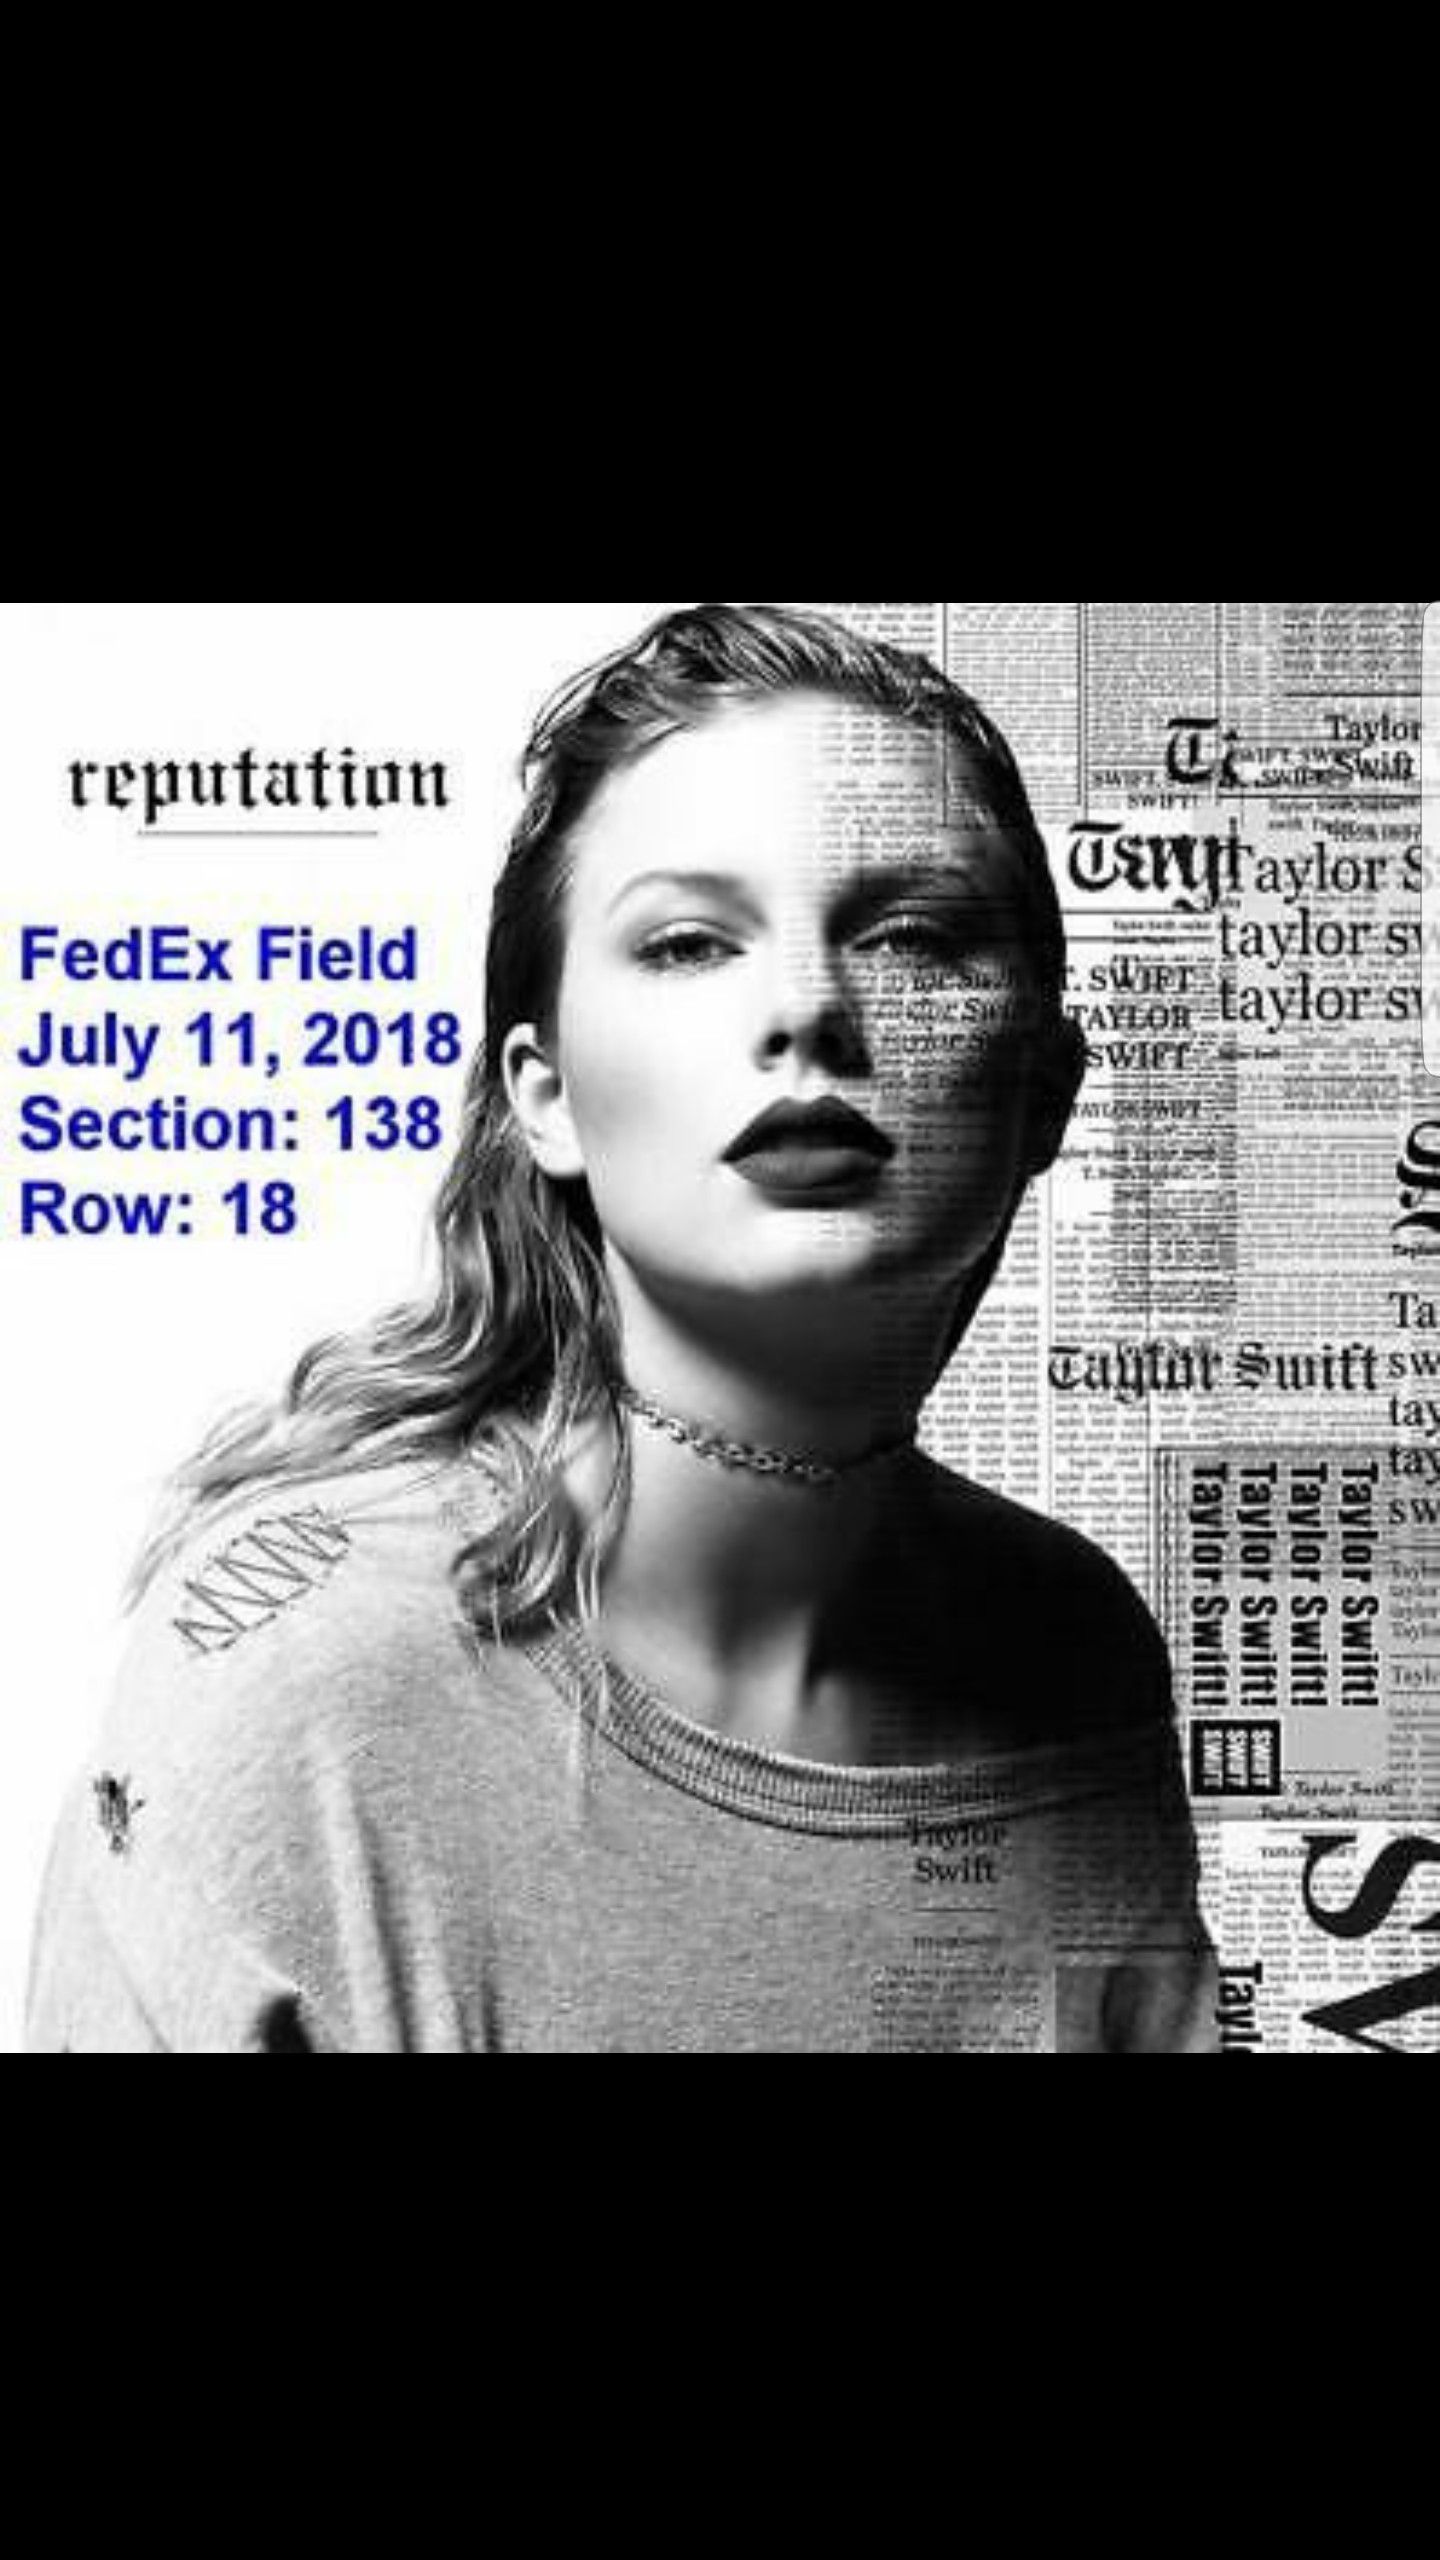 2 Taylor Swift tickets - SEC 138 ROW 18 Wed July 7/11 - FedEx Field Landover